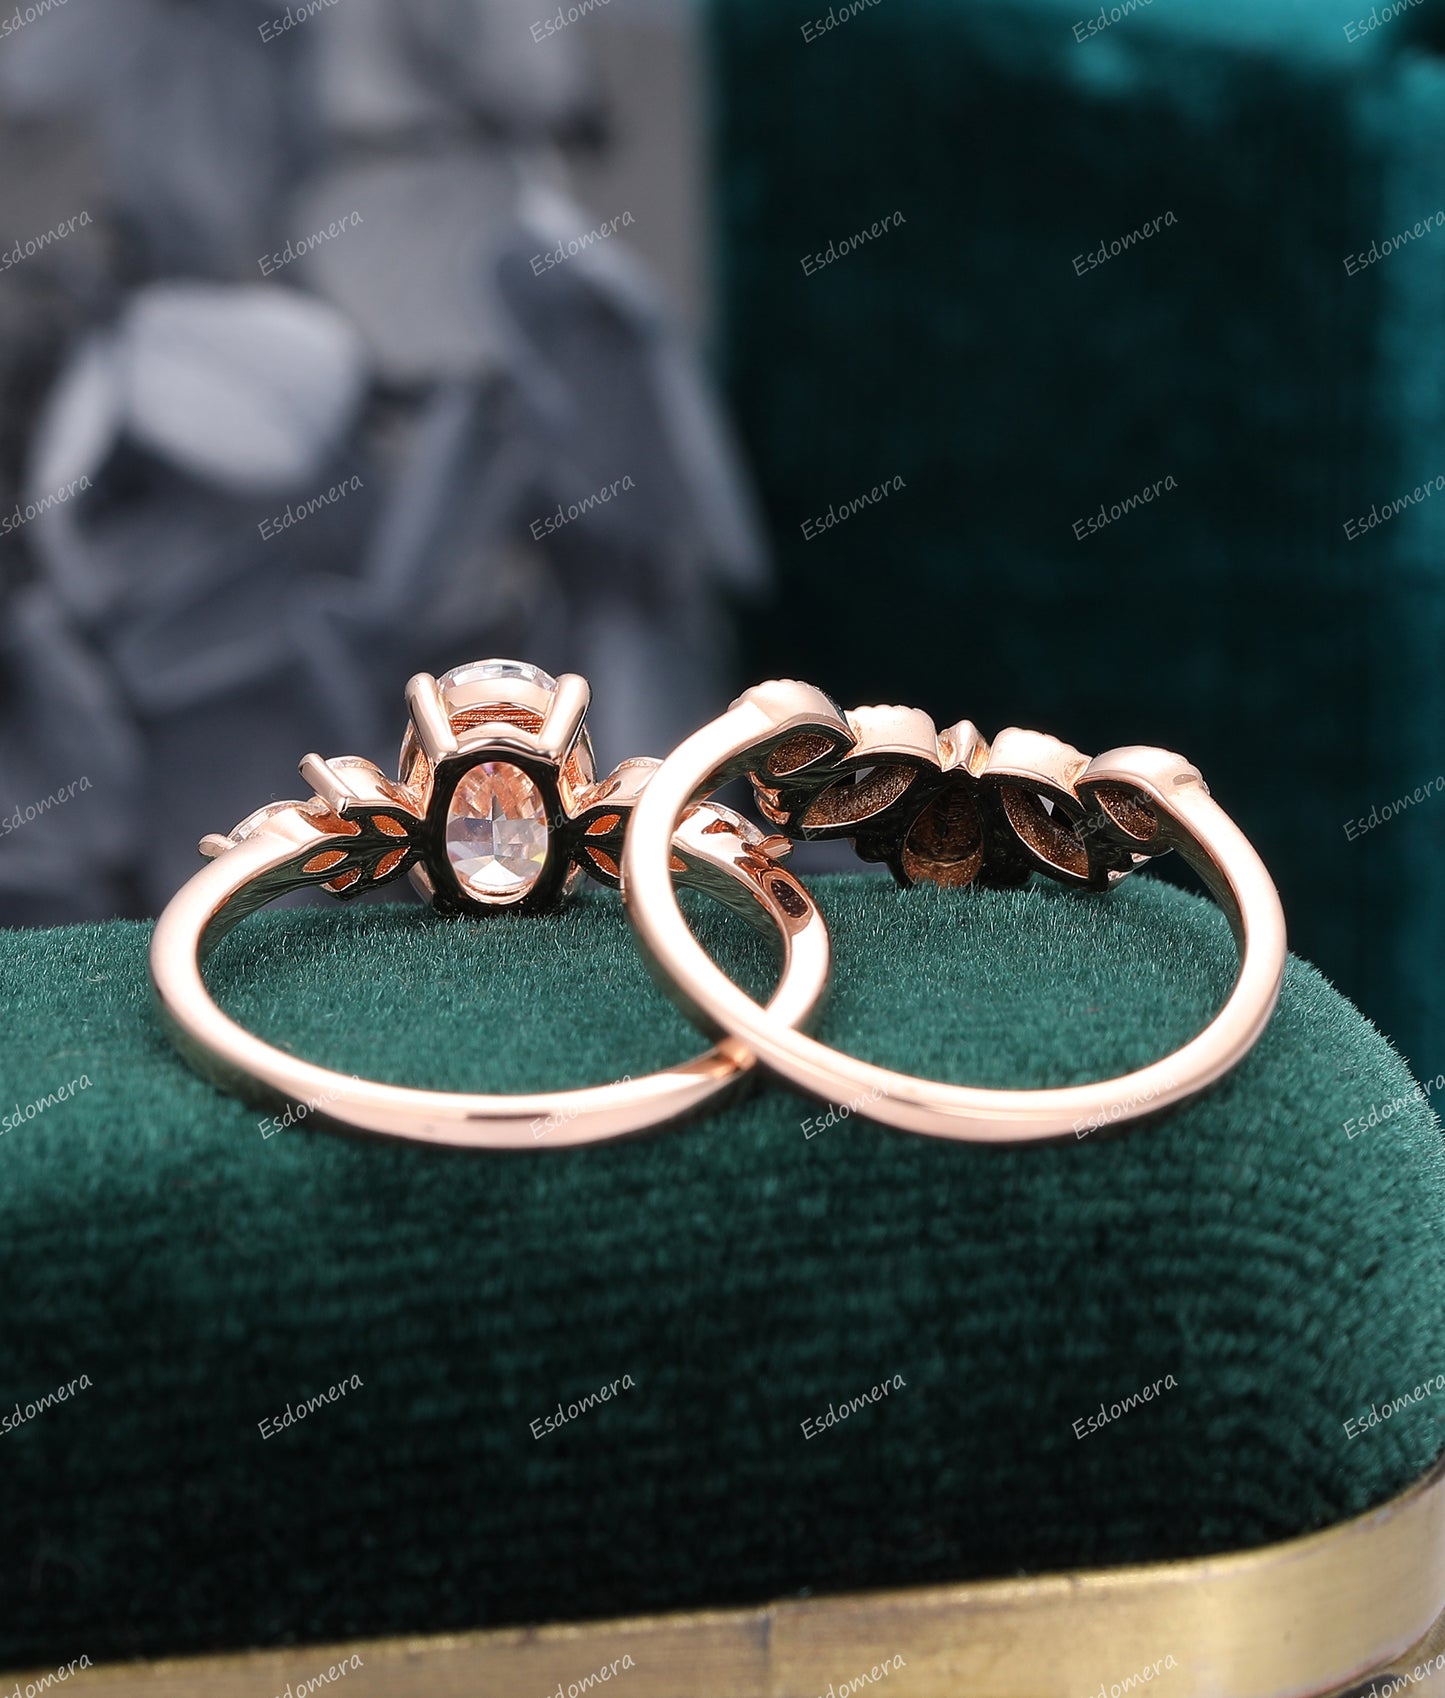 6x8mm Oval Moissanite Engagement Ring, Black Zircon Wedding Band, Bridal Ring Set, Vintage Art Deco Ring Set